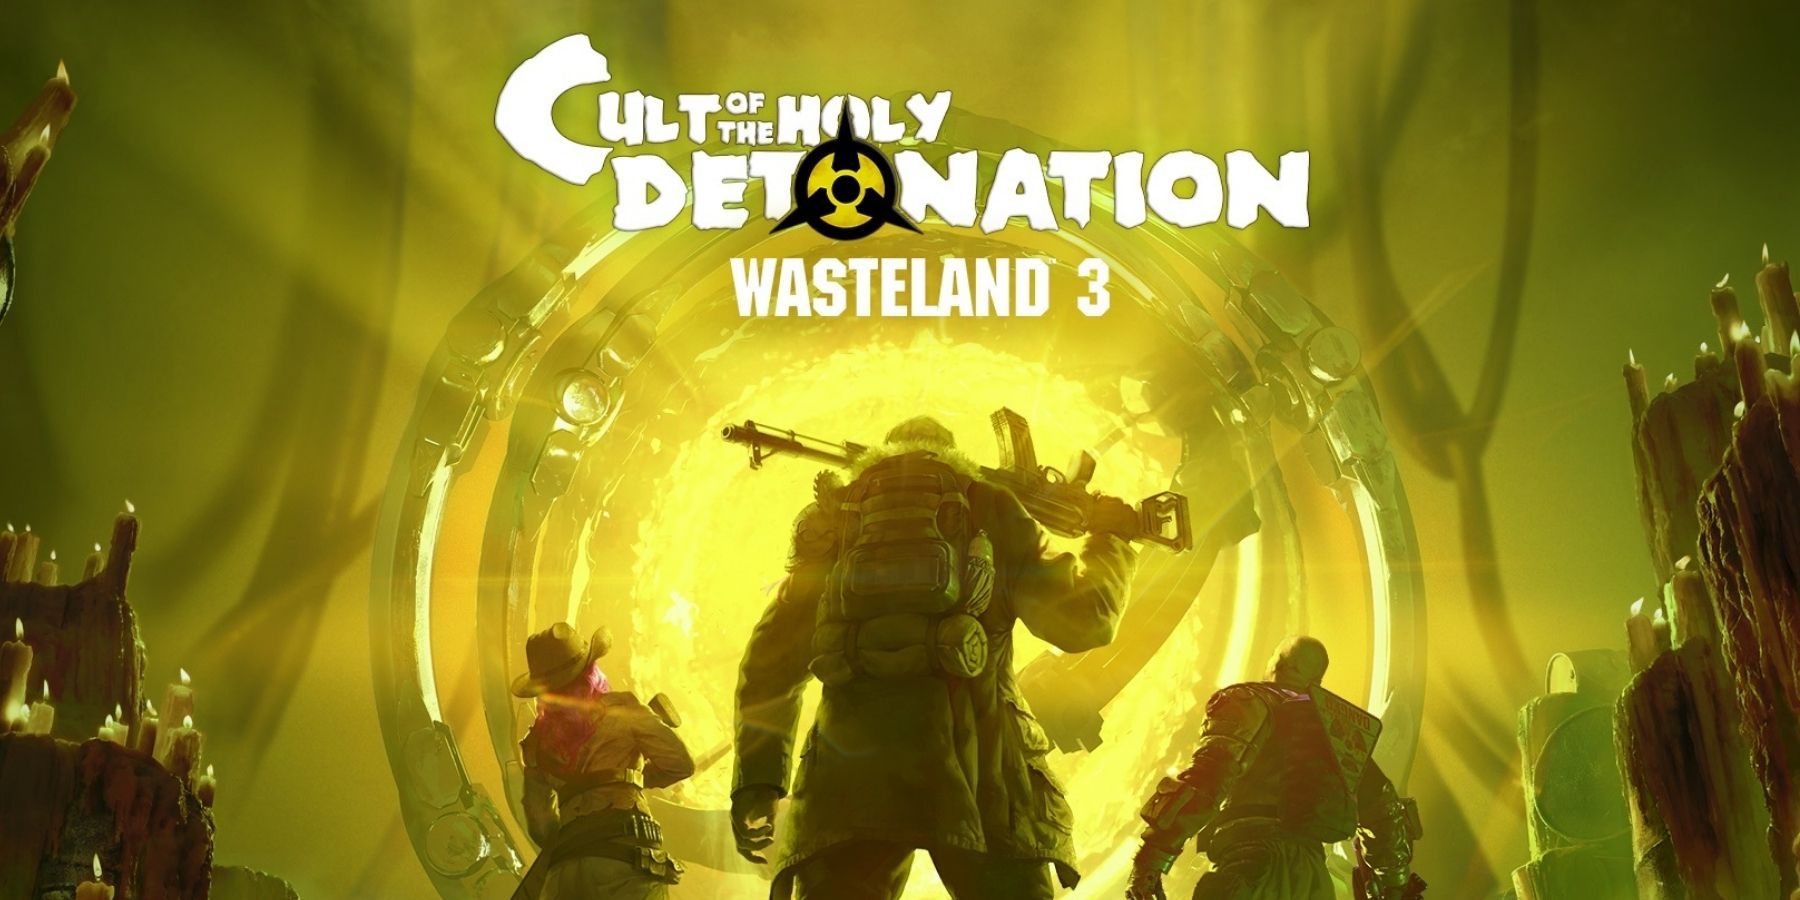 GameRant Wasteland 3 - Cult of Holy Detonation Expansion